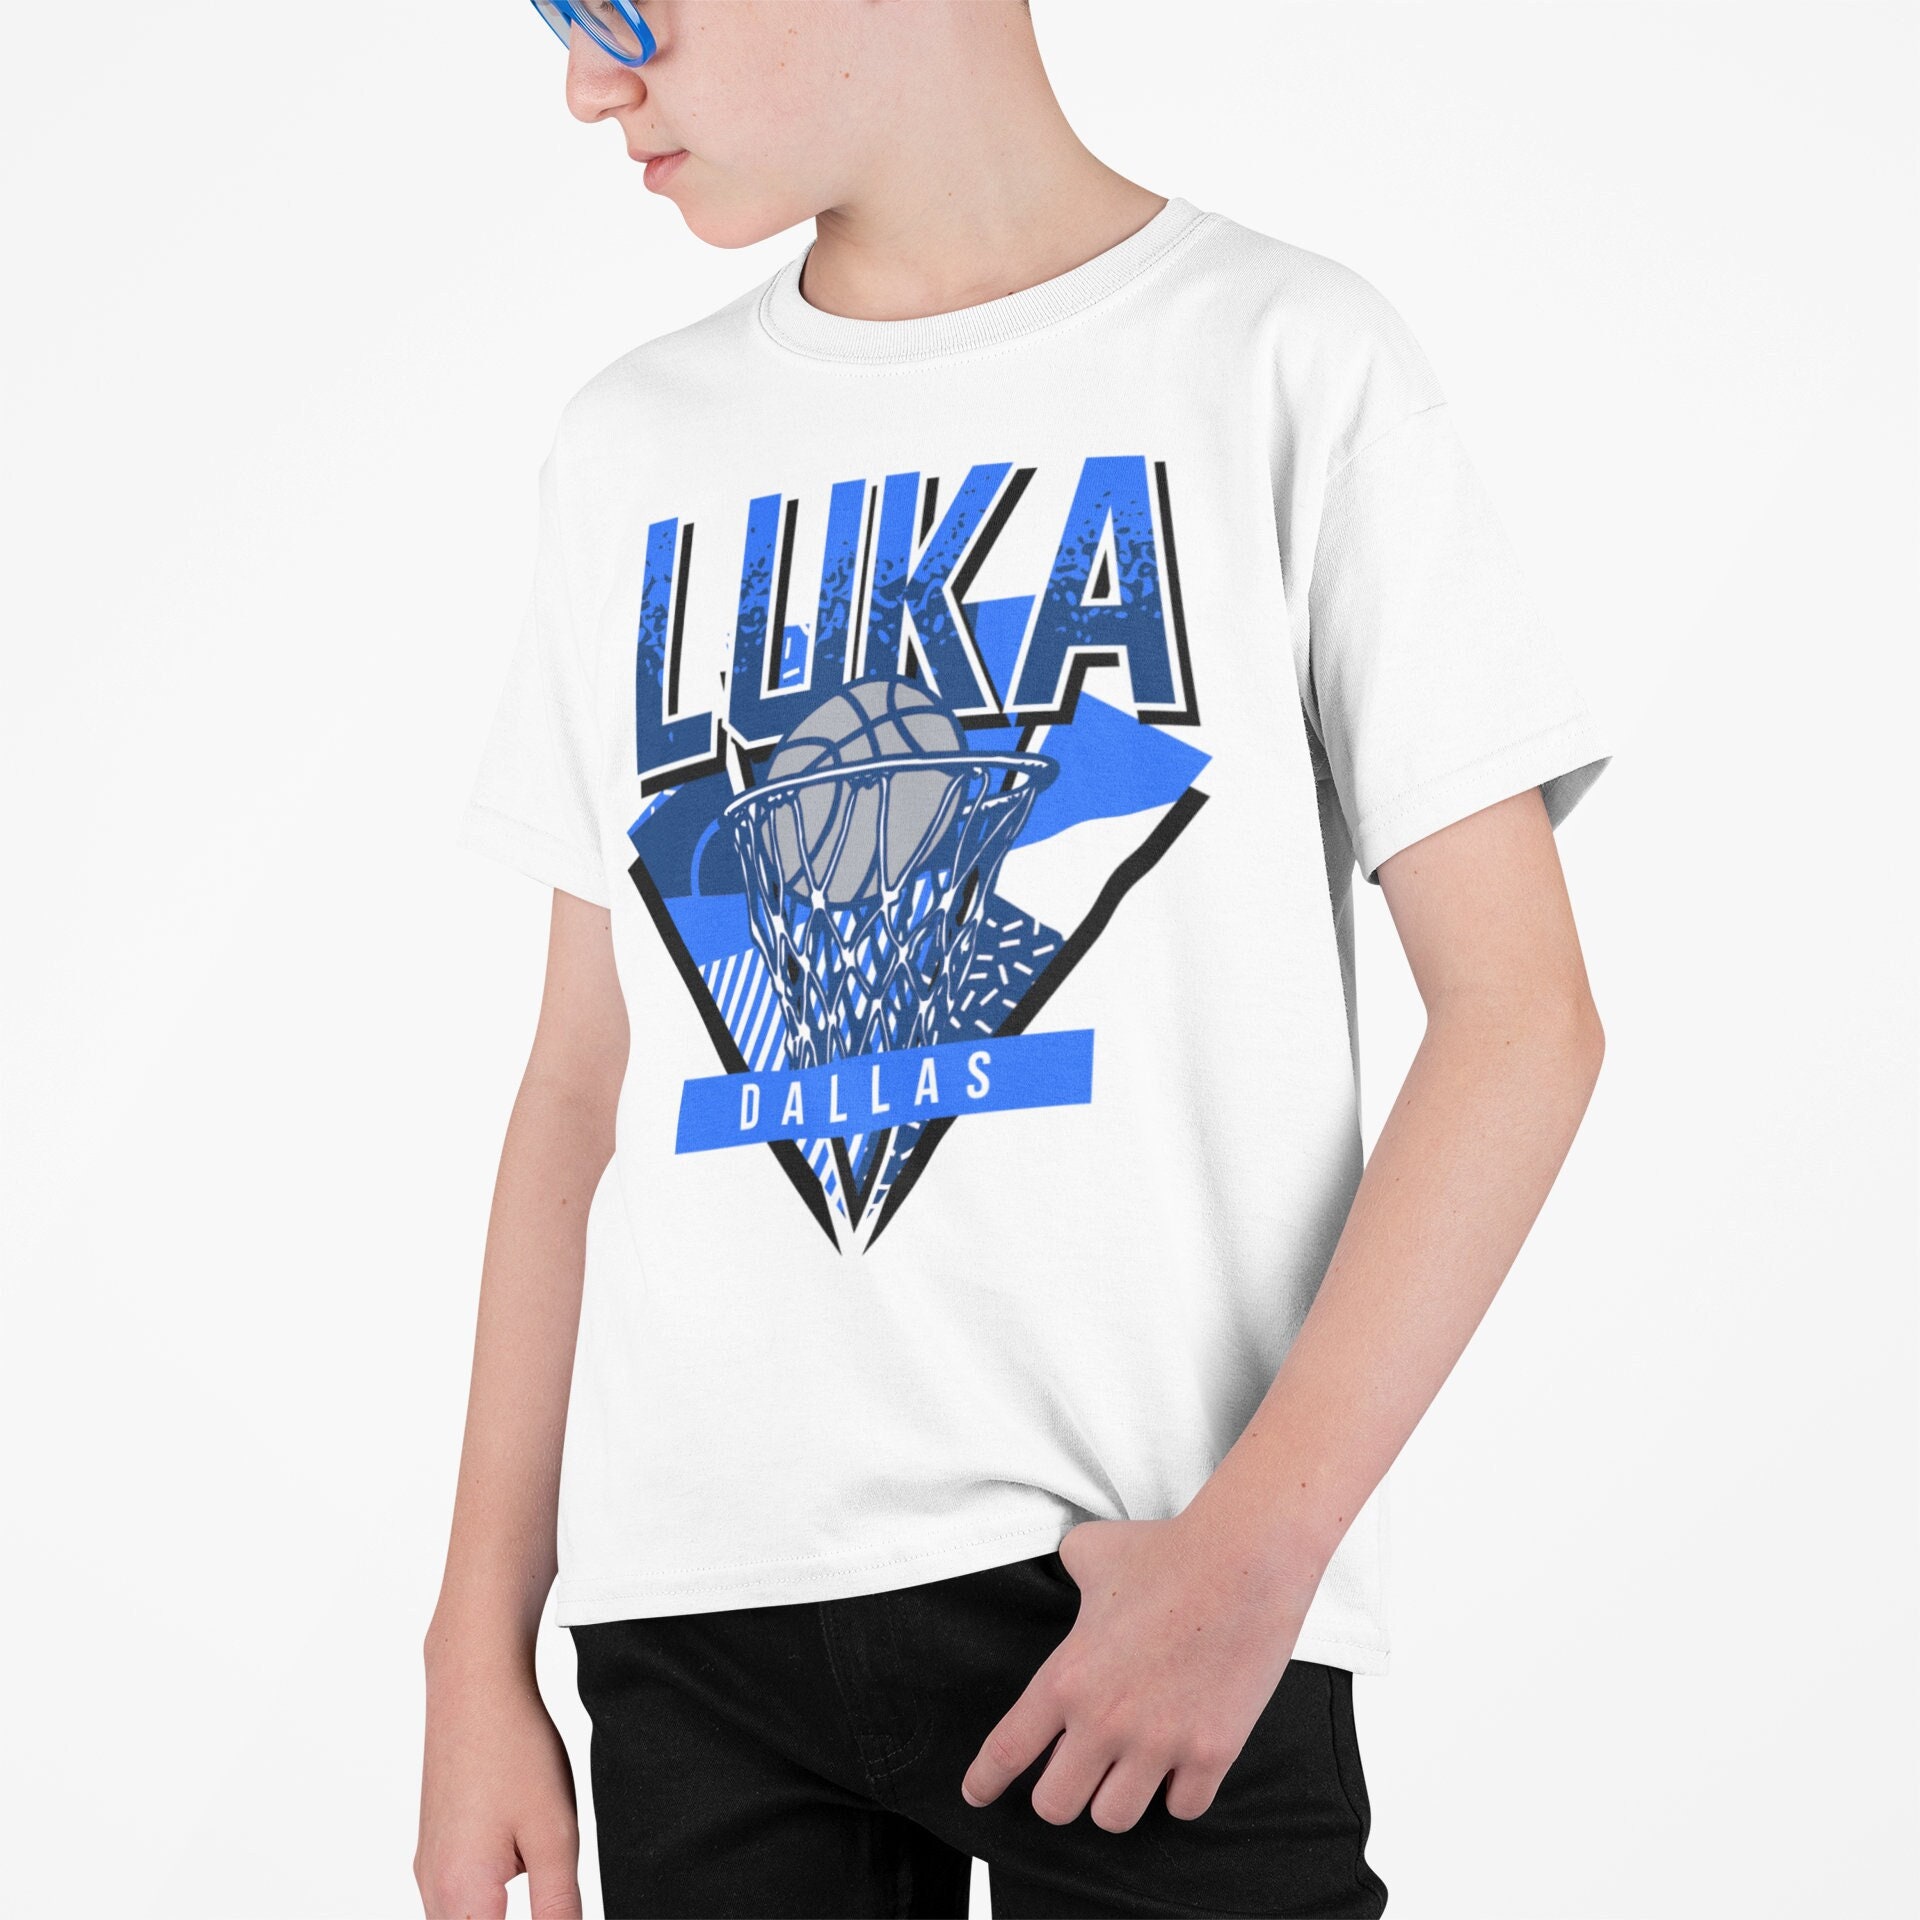 Luka Magic Luka Doncic Vintage T Shirt Black, Custom prints store